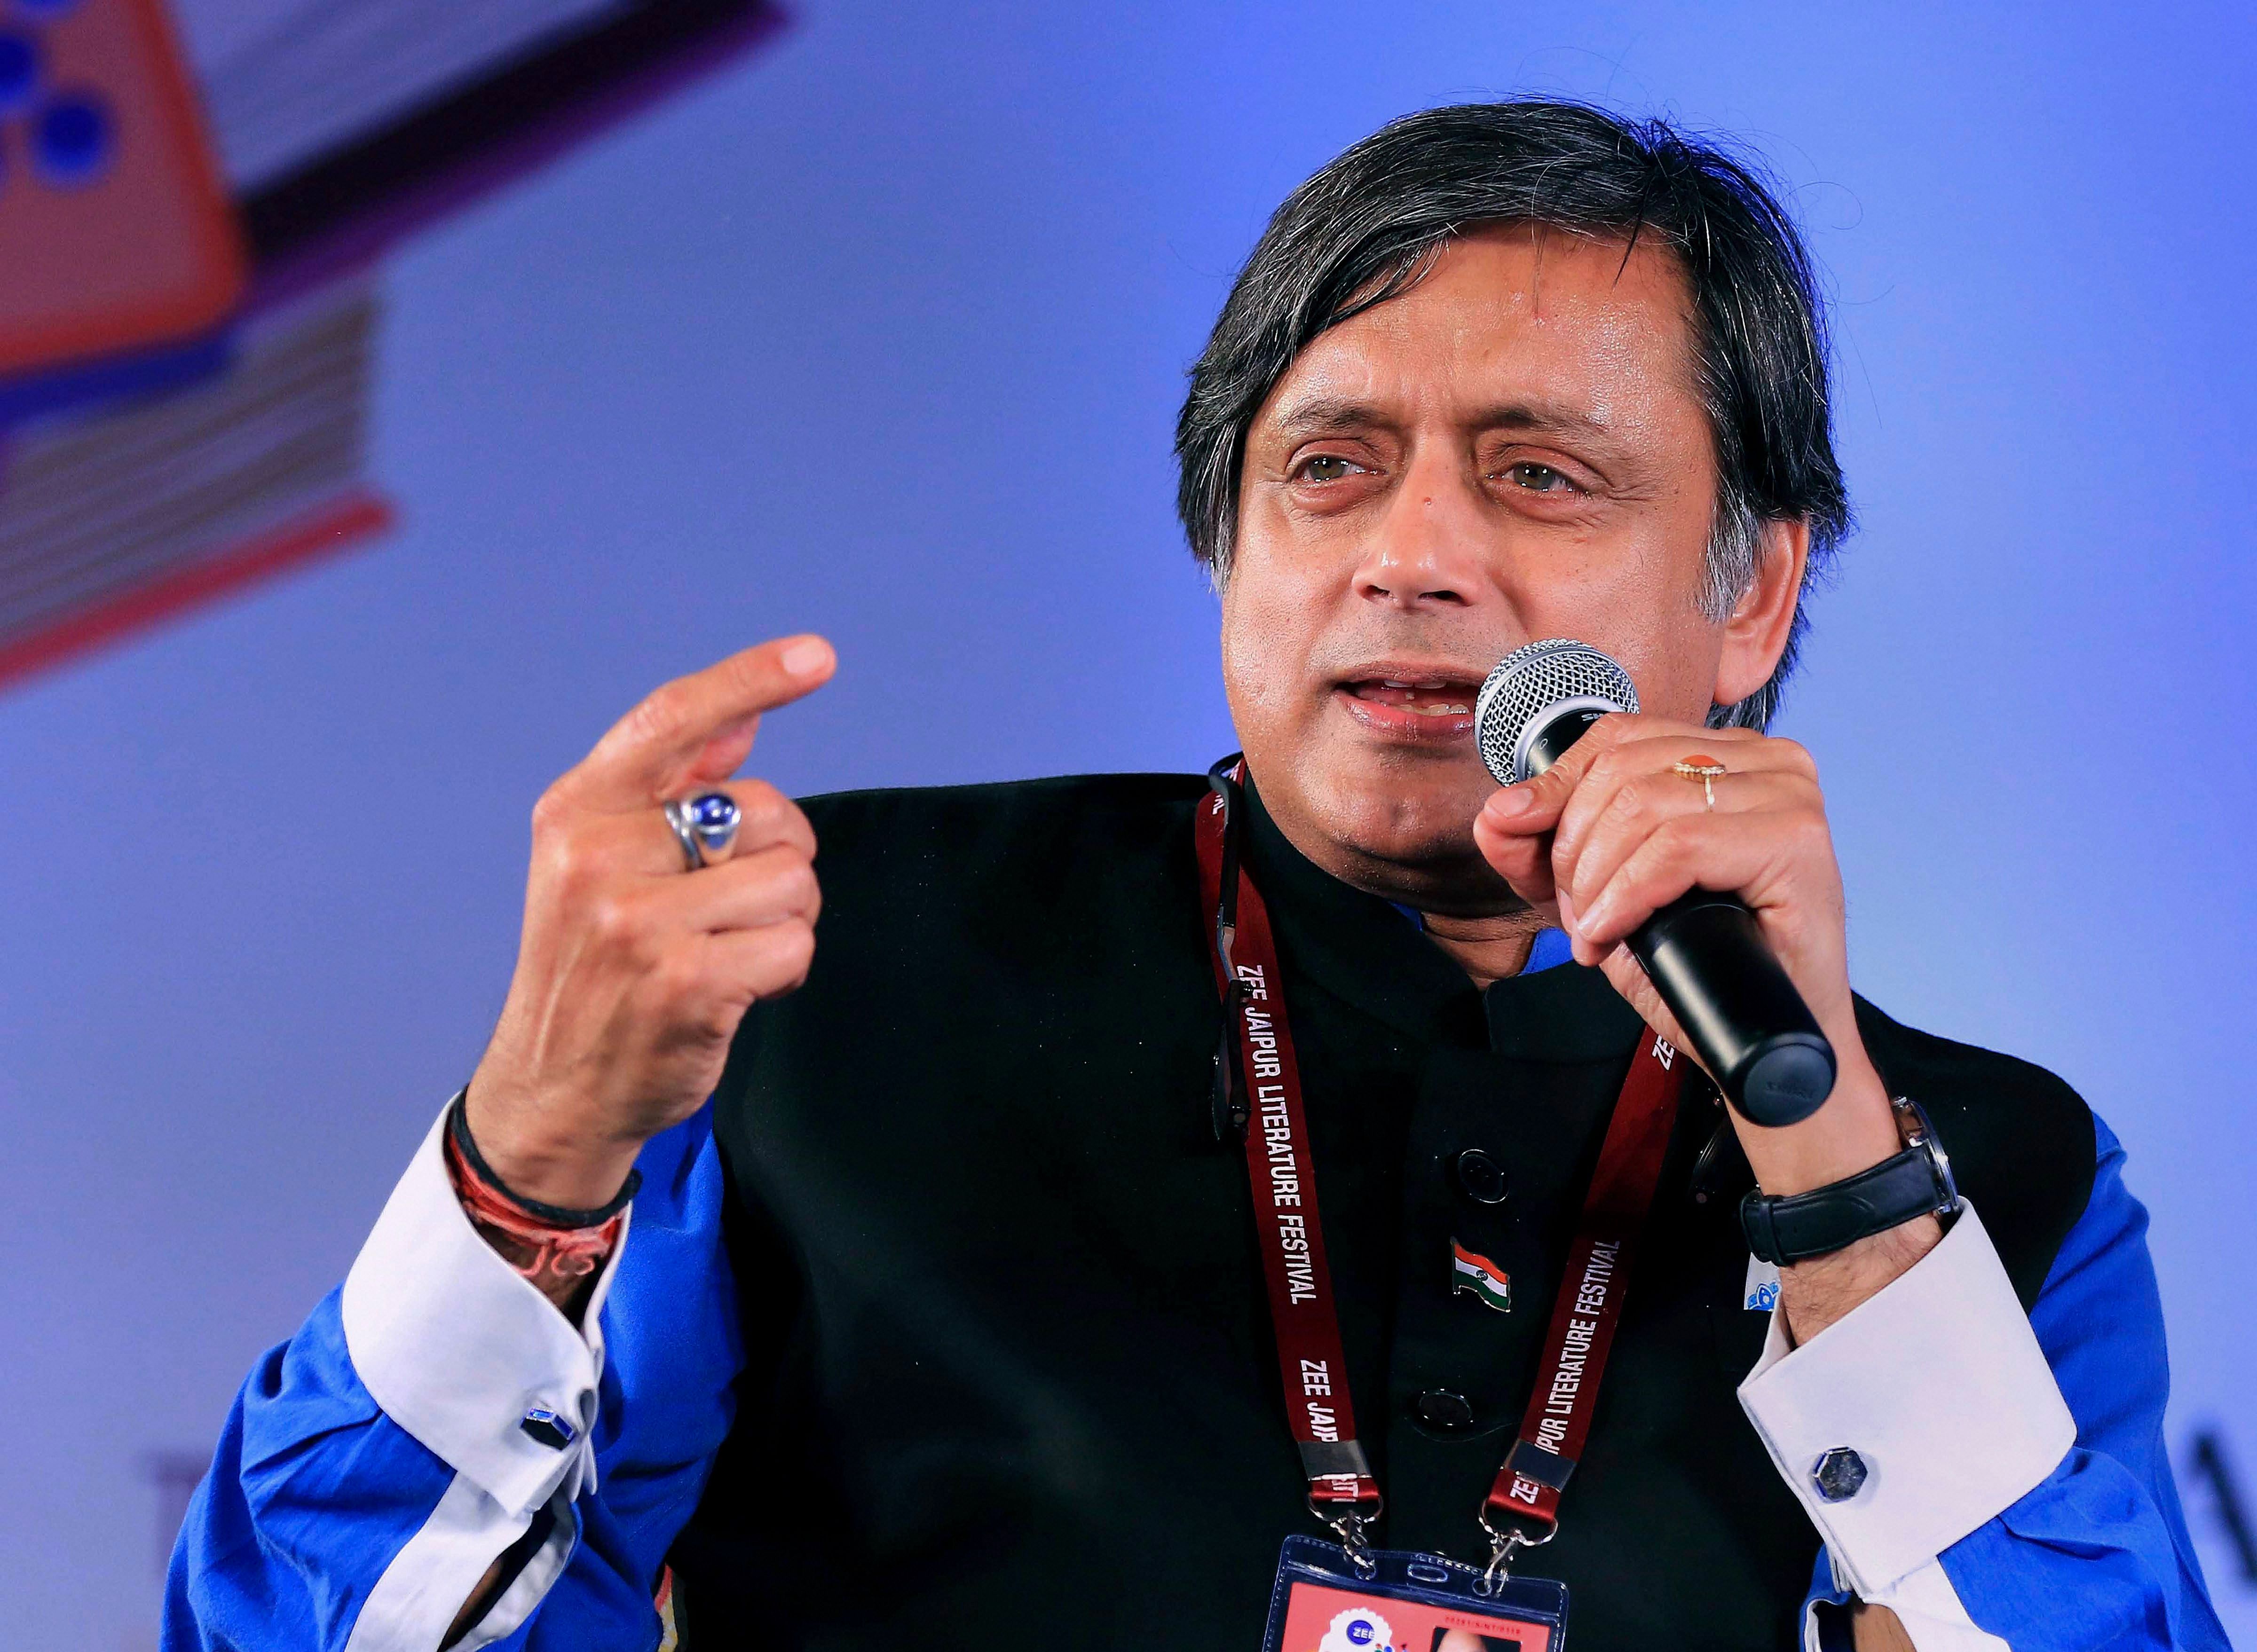 Congress leader Shashi Tharoor. (PTI Photo)